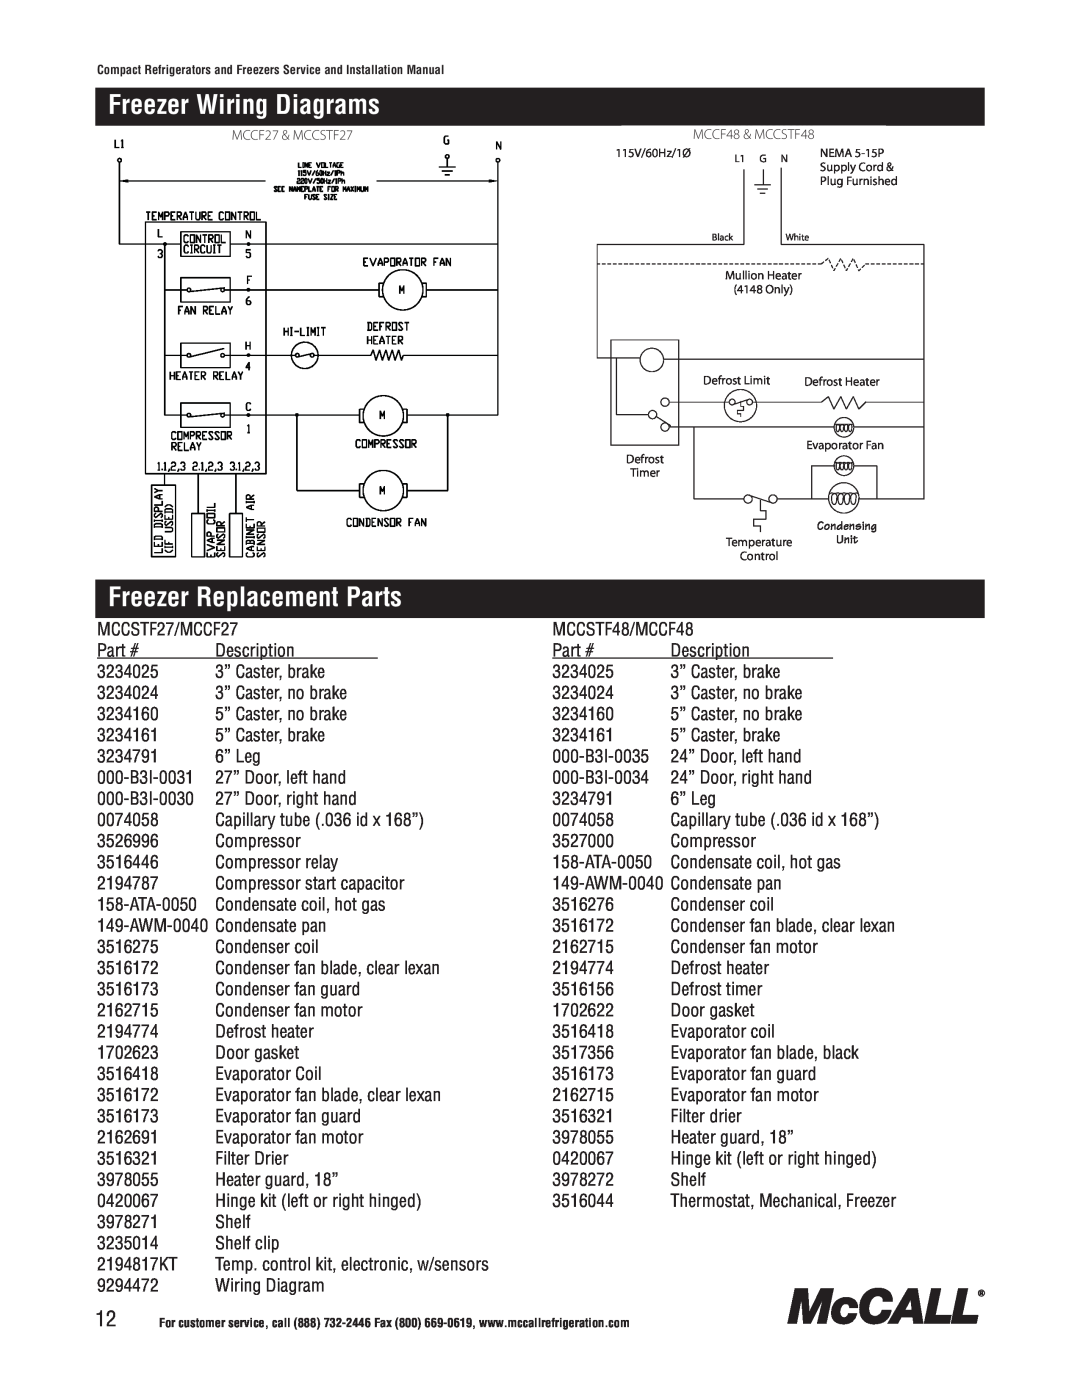 McCall Refrigeration MCCSTF48, MCCSTR48, MCCSTR27, MCCR48, MCCF48 Freezer Wiring Diagrams, Freezer Replacement Parts, Series 